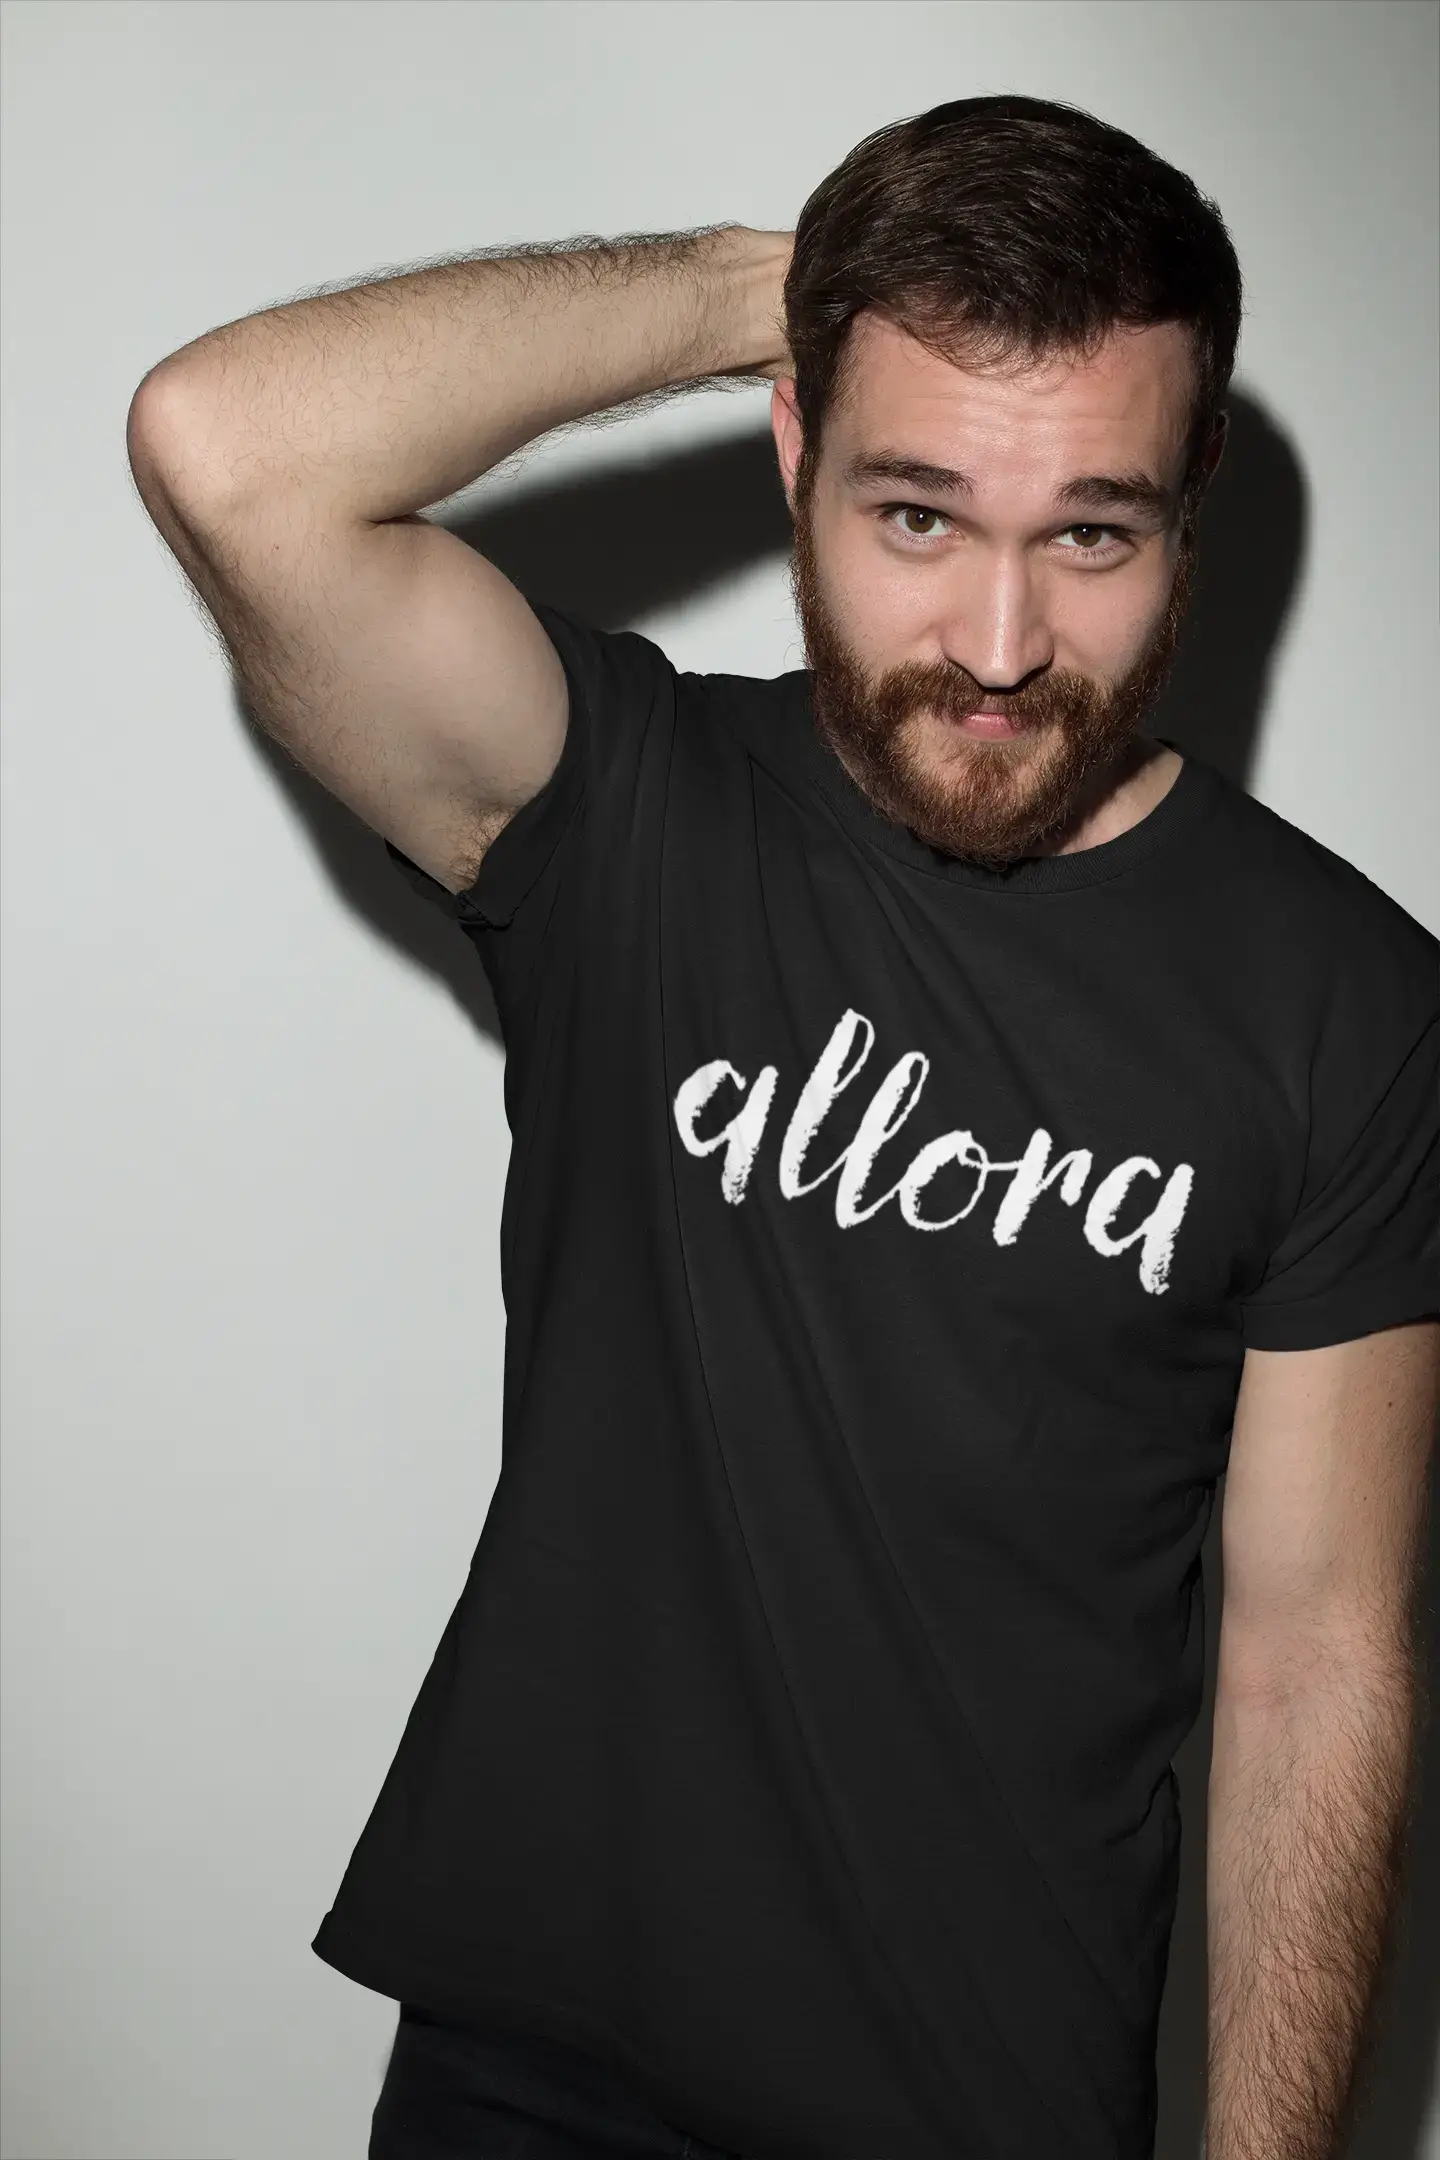 ULTRABASIC - Graphic Printed Men's Allora T-Shirt Denim